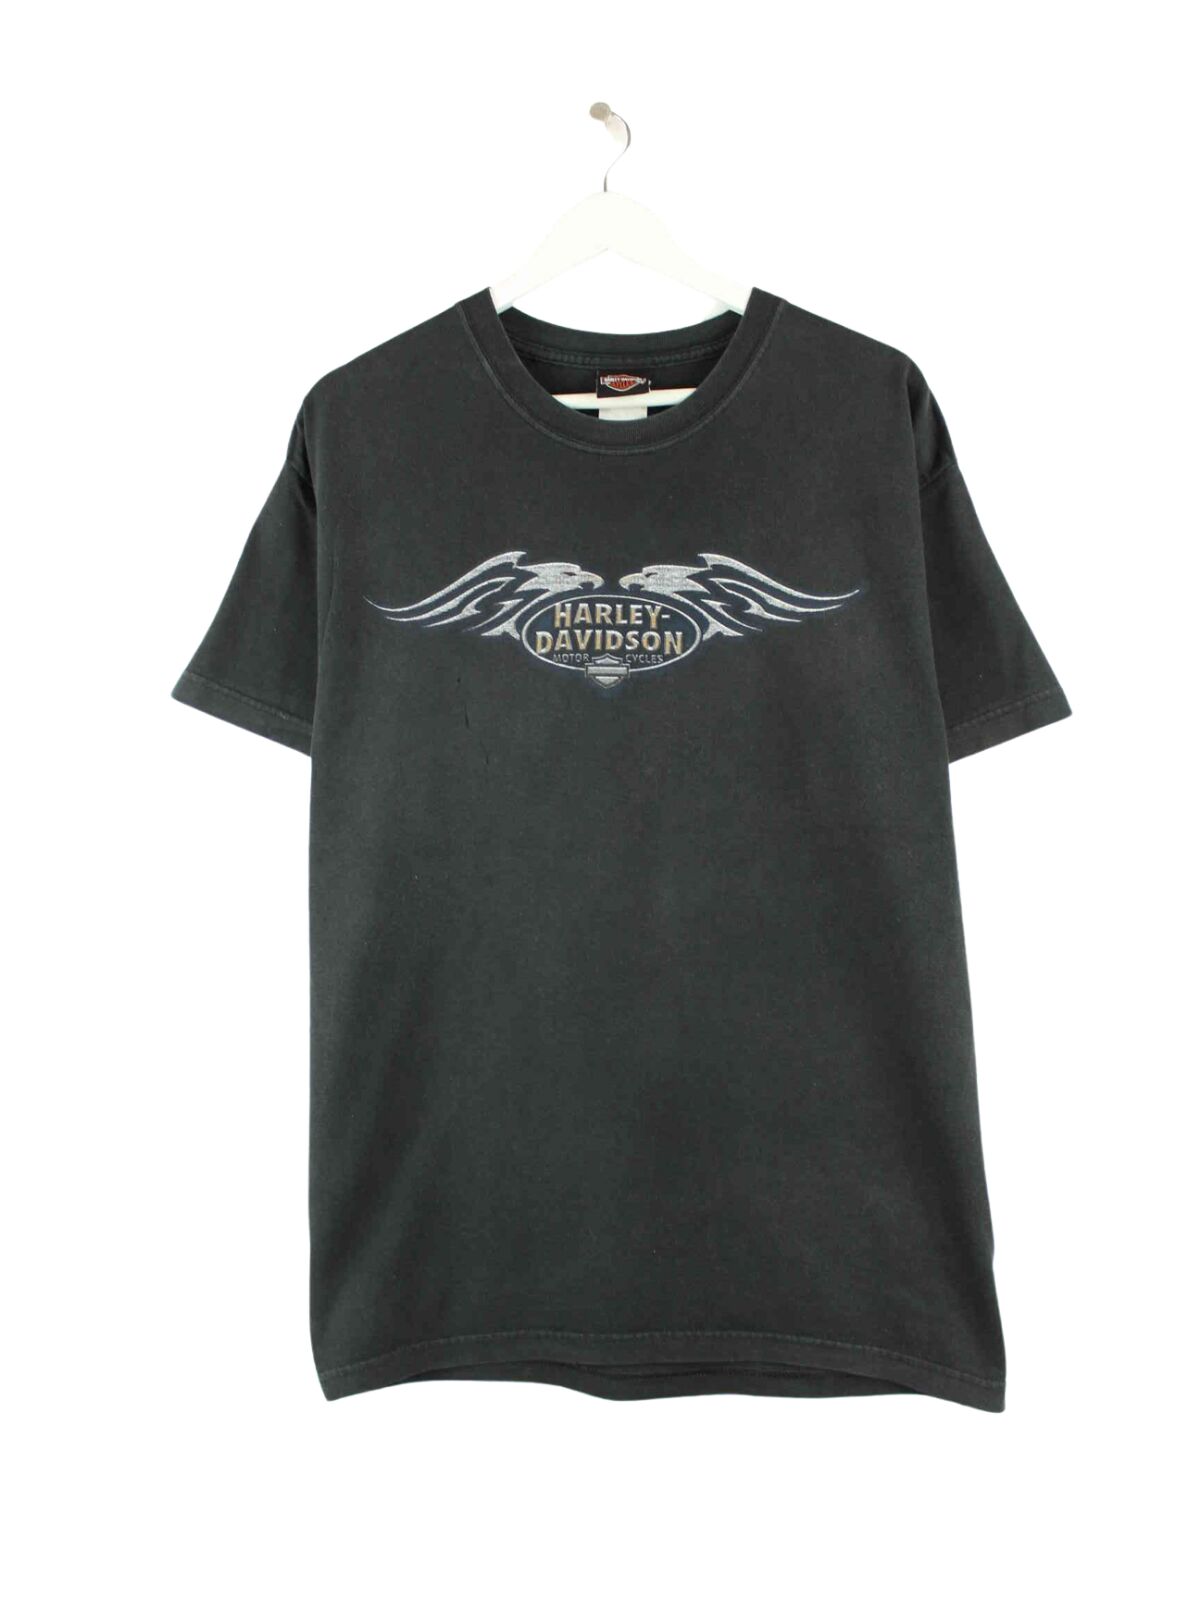 Harley Davidson y2k Tempe Arizona Print T-Shirt Schwarz L (front image)